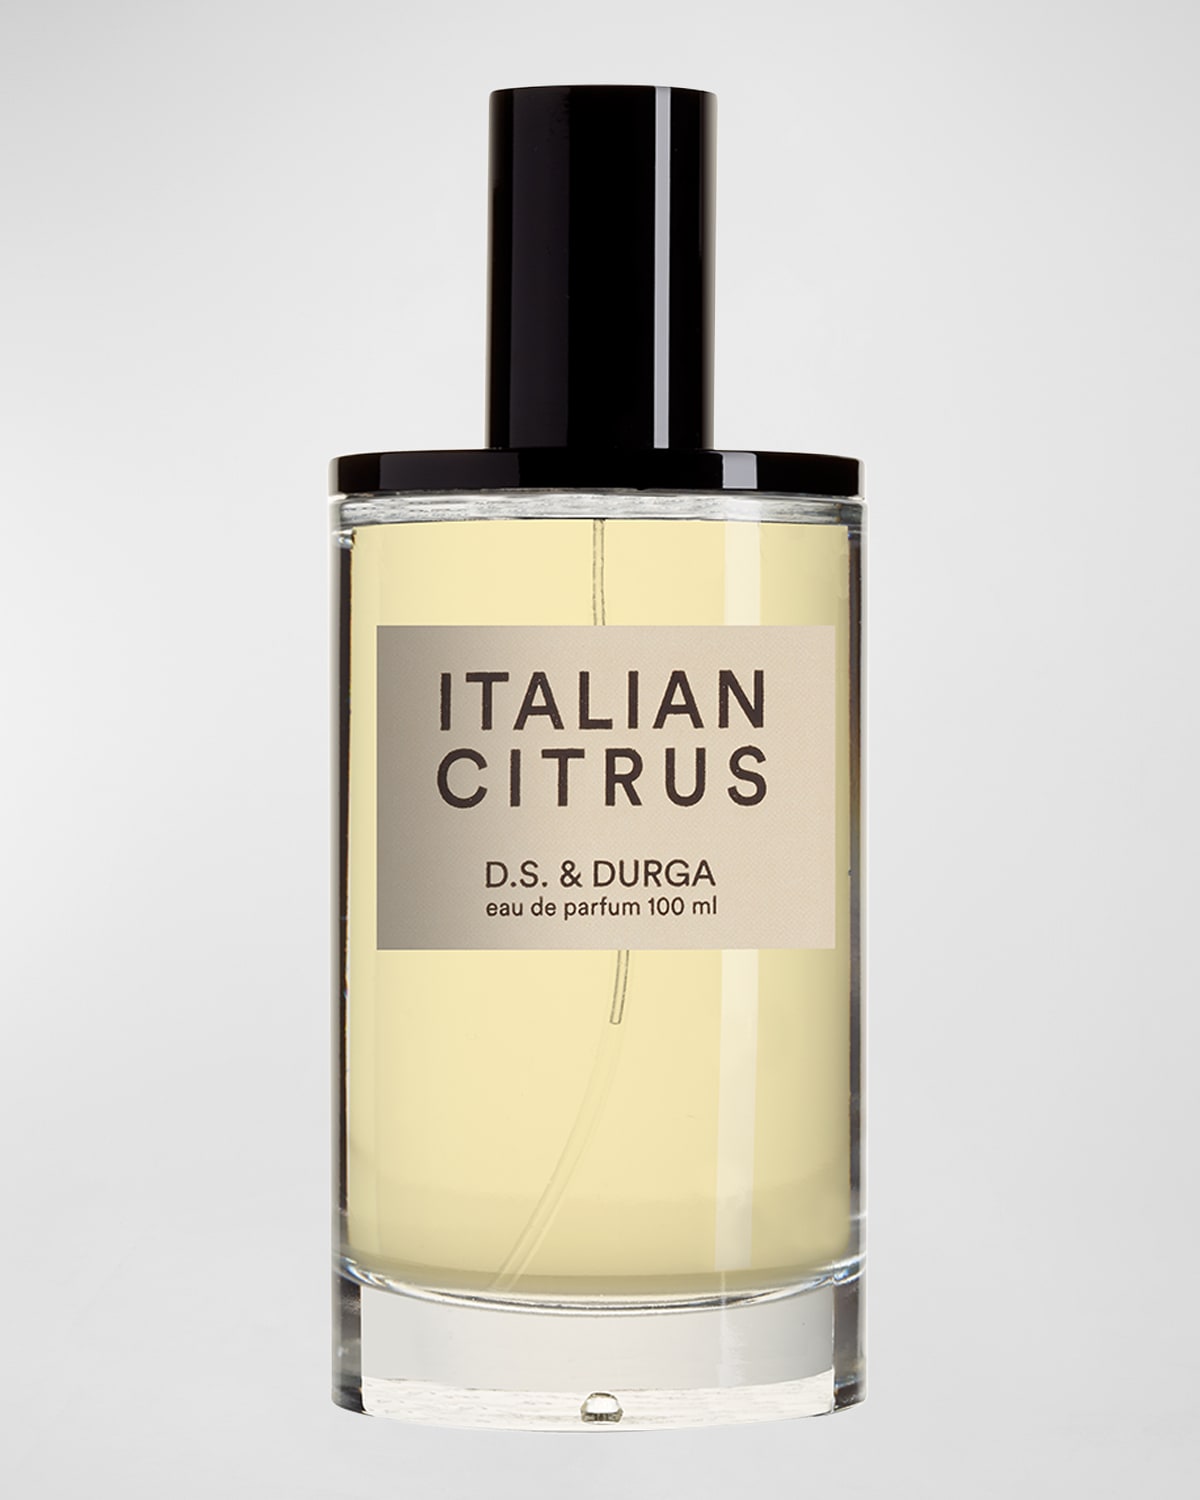 D.S. & DURGA Italian Citrus Eau de Parfum, 3.4 oz.